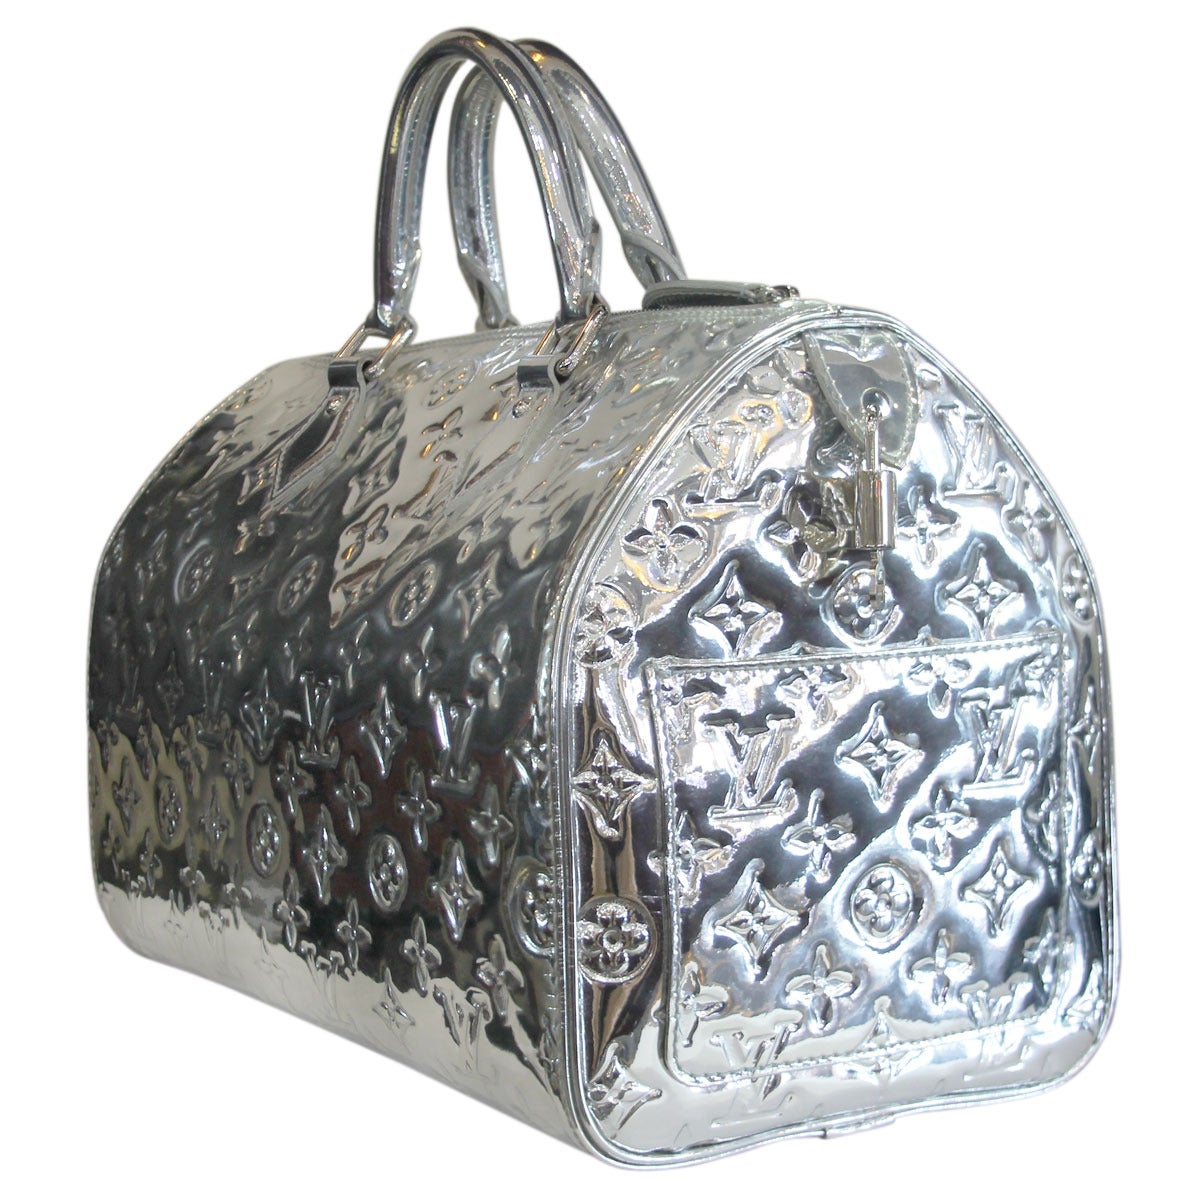 Louis Vuitton - Authenticated Speedy Handbag - Leather Silver Plain for Women, Never Worn